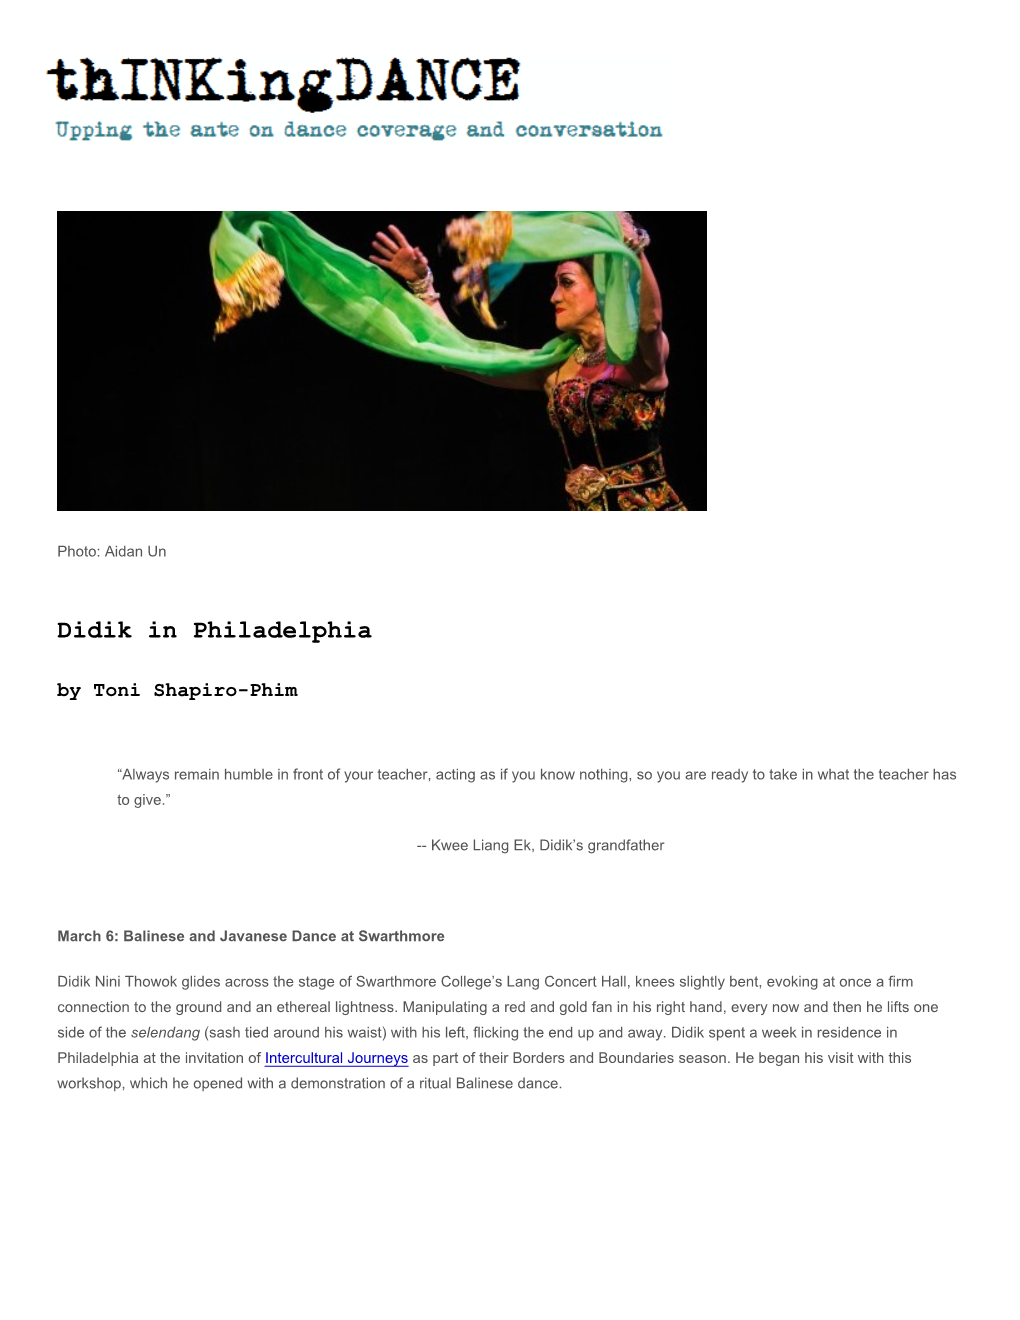 Didik in Philadelphia by Toni Shapiro-Phim